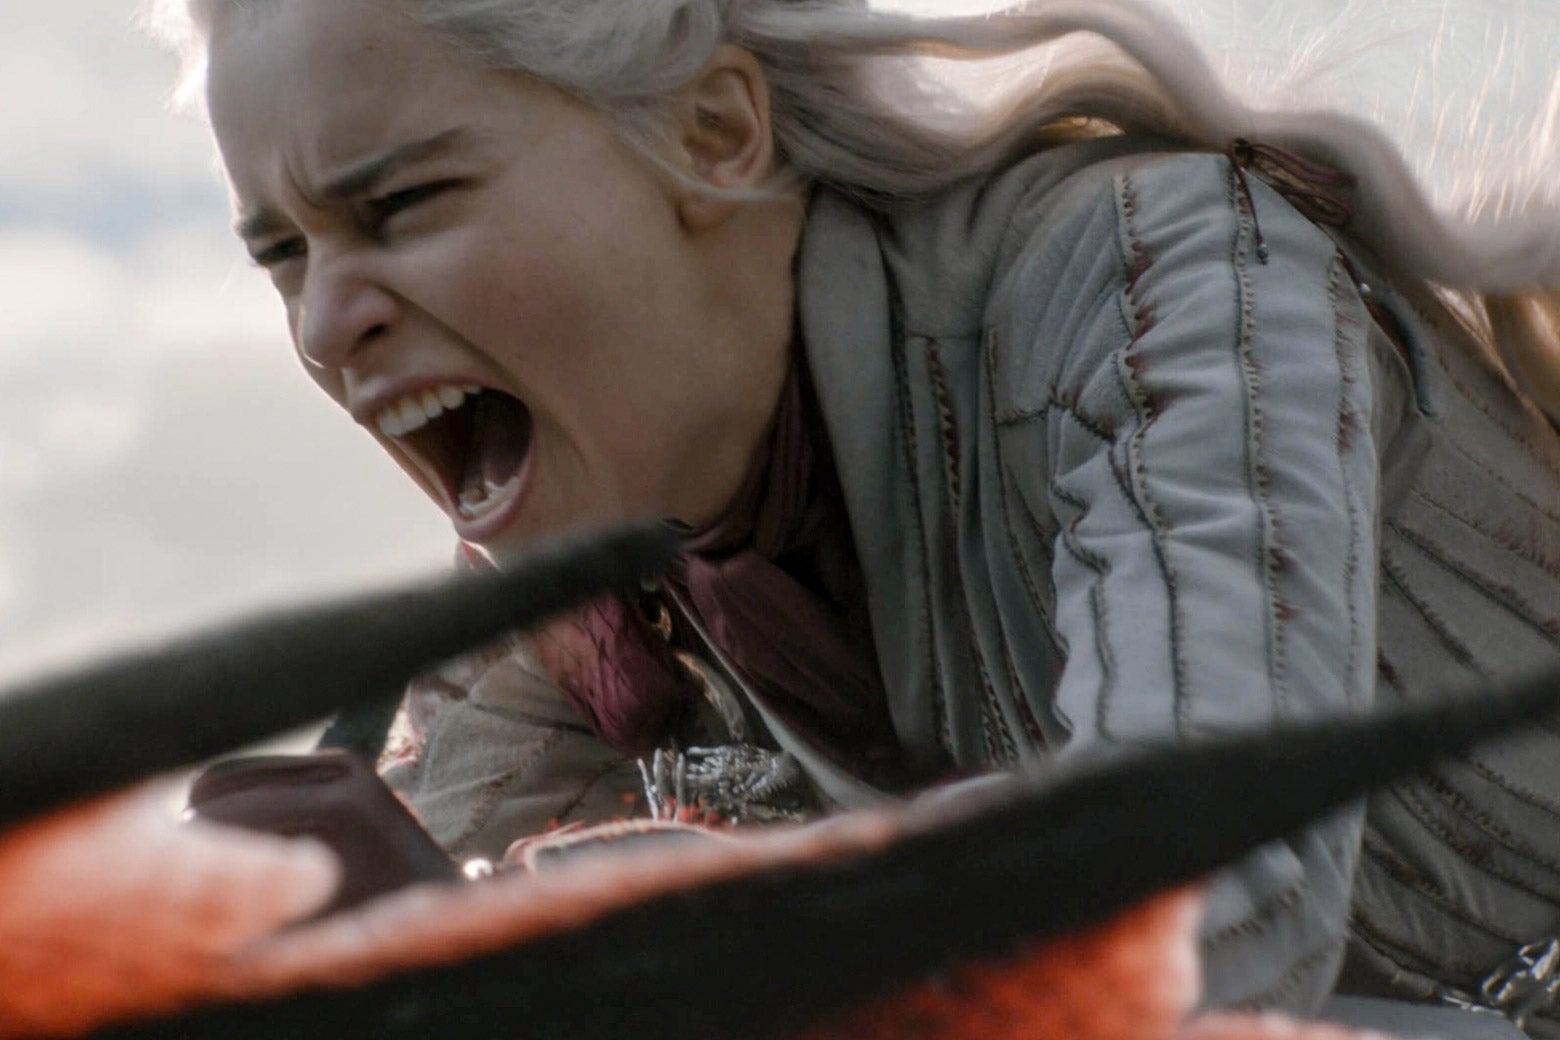 Daenerys Targaryen mid-scream as she rides a dragon.